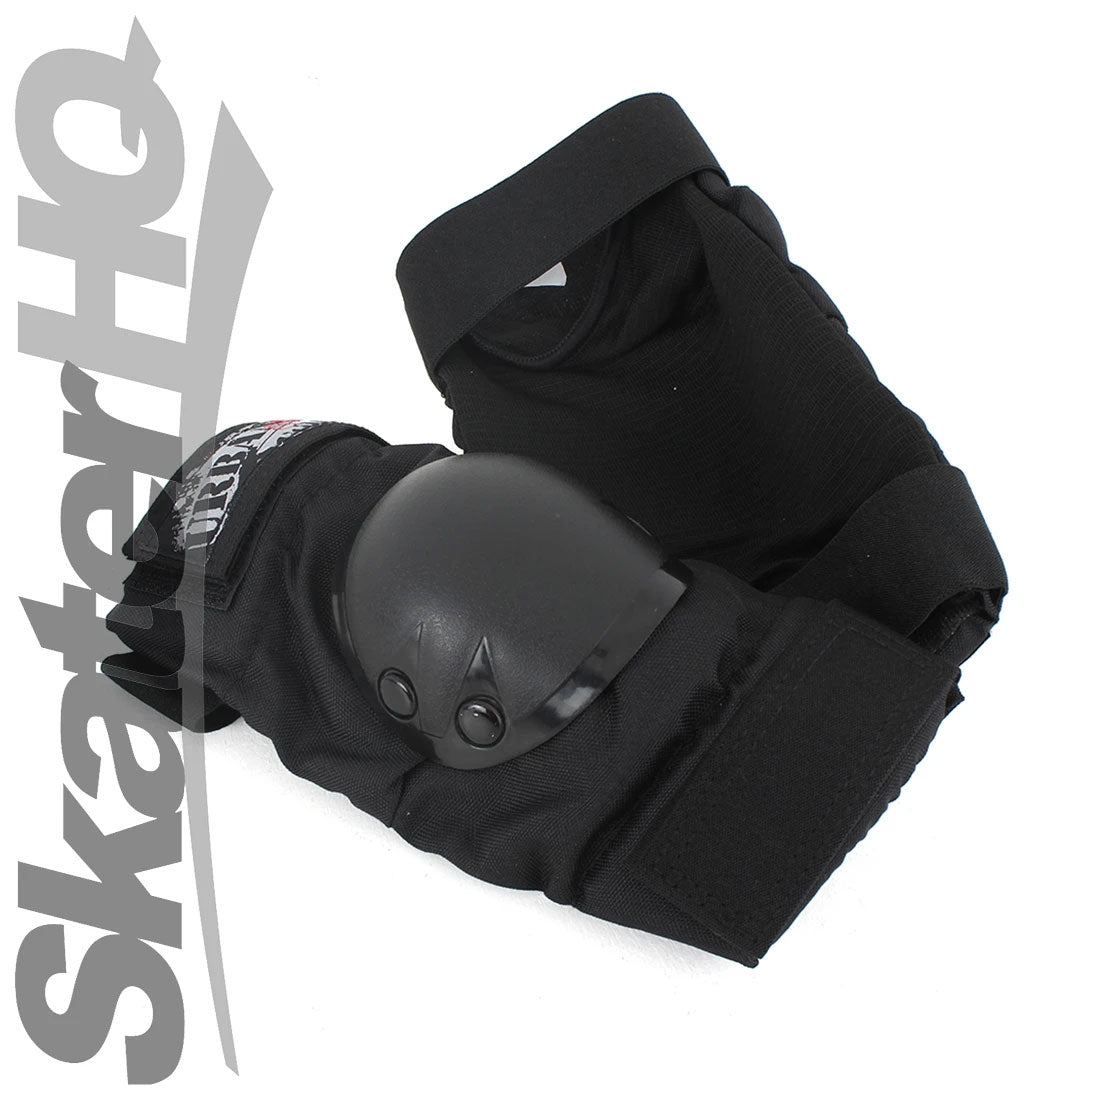 Urban Skater Knee/Elbow Black - Grommet Protective Gear